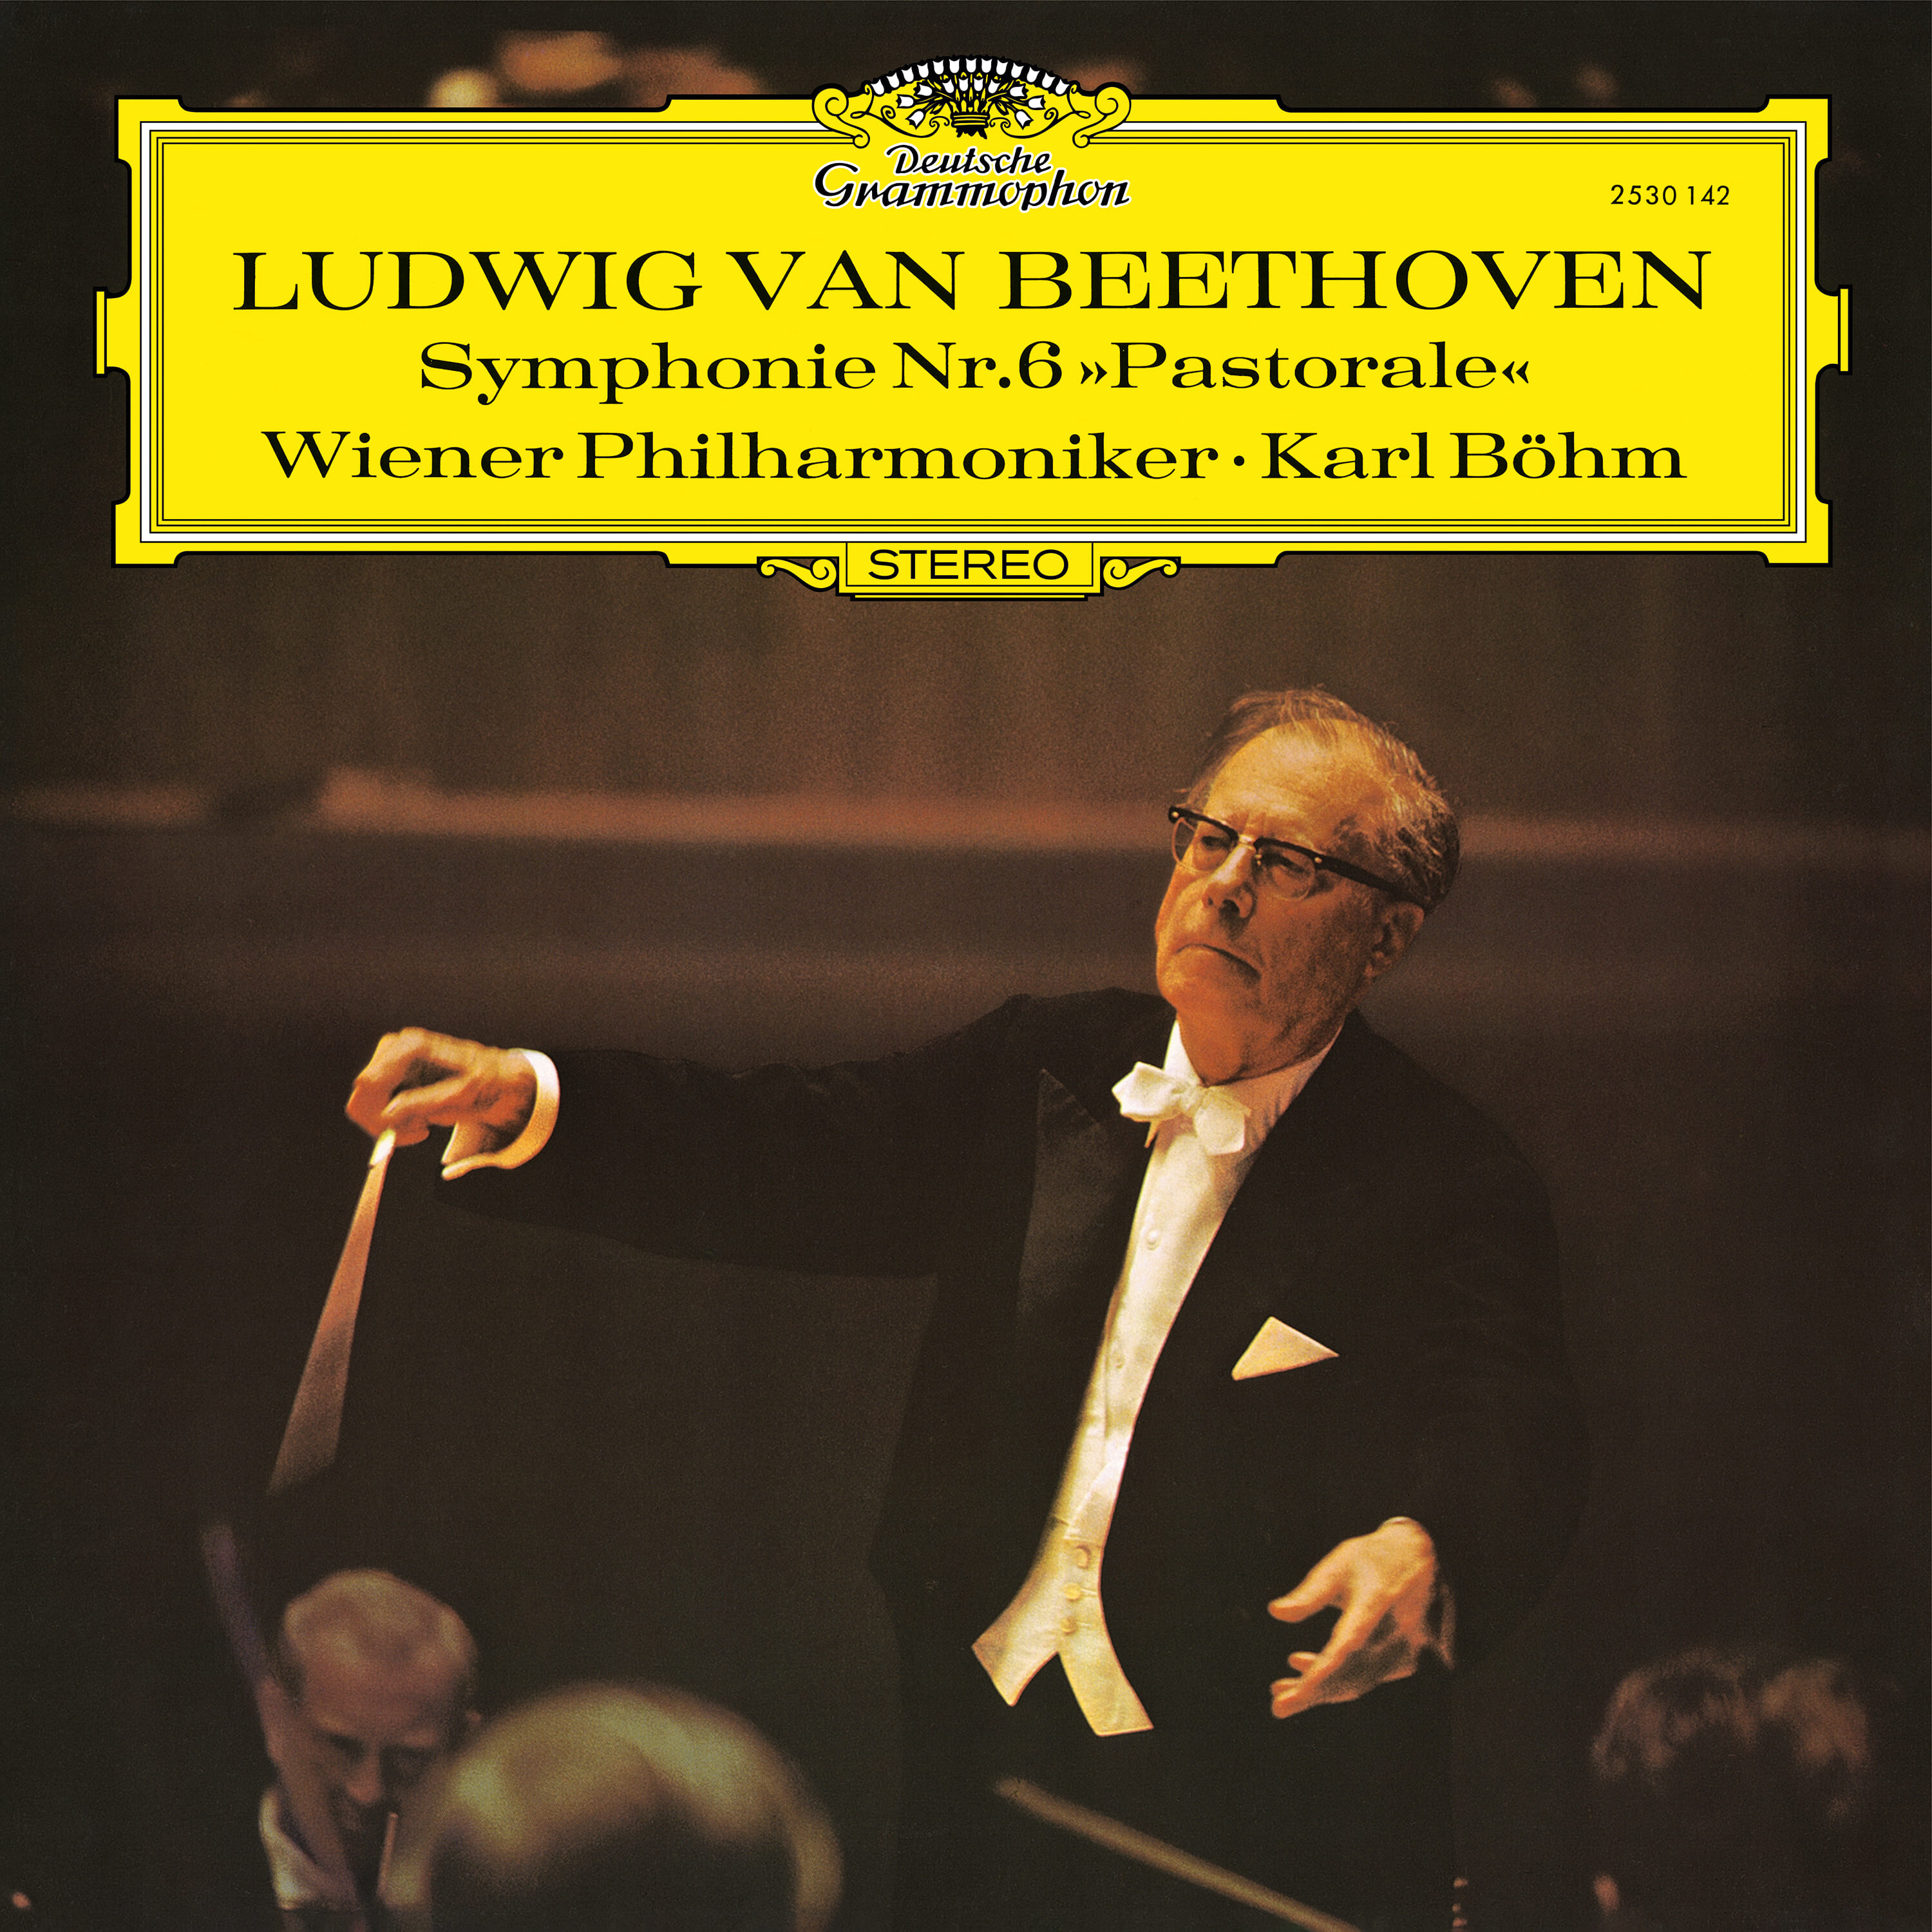 Beethoven: Symphony No. 6 „Pastorale“ (Original Source)